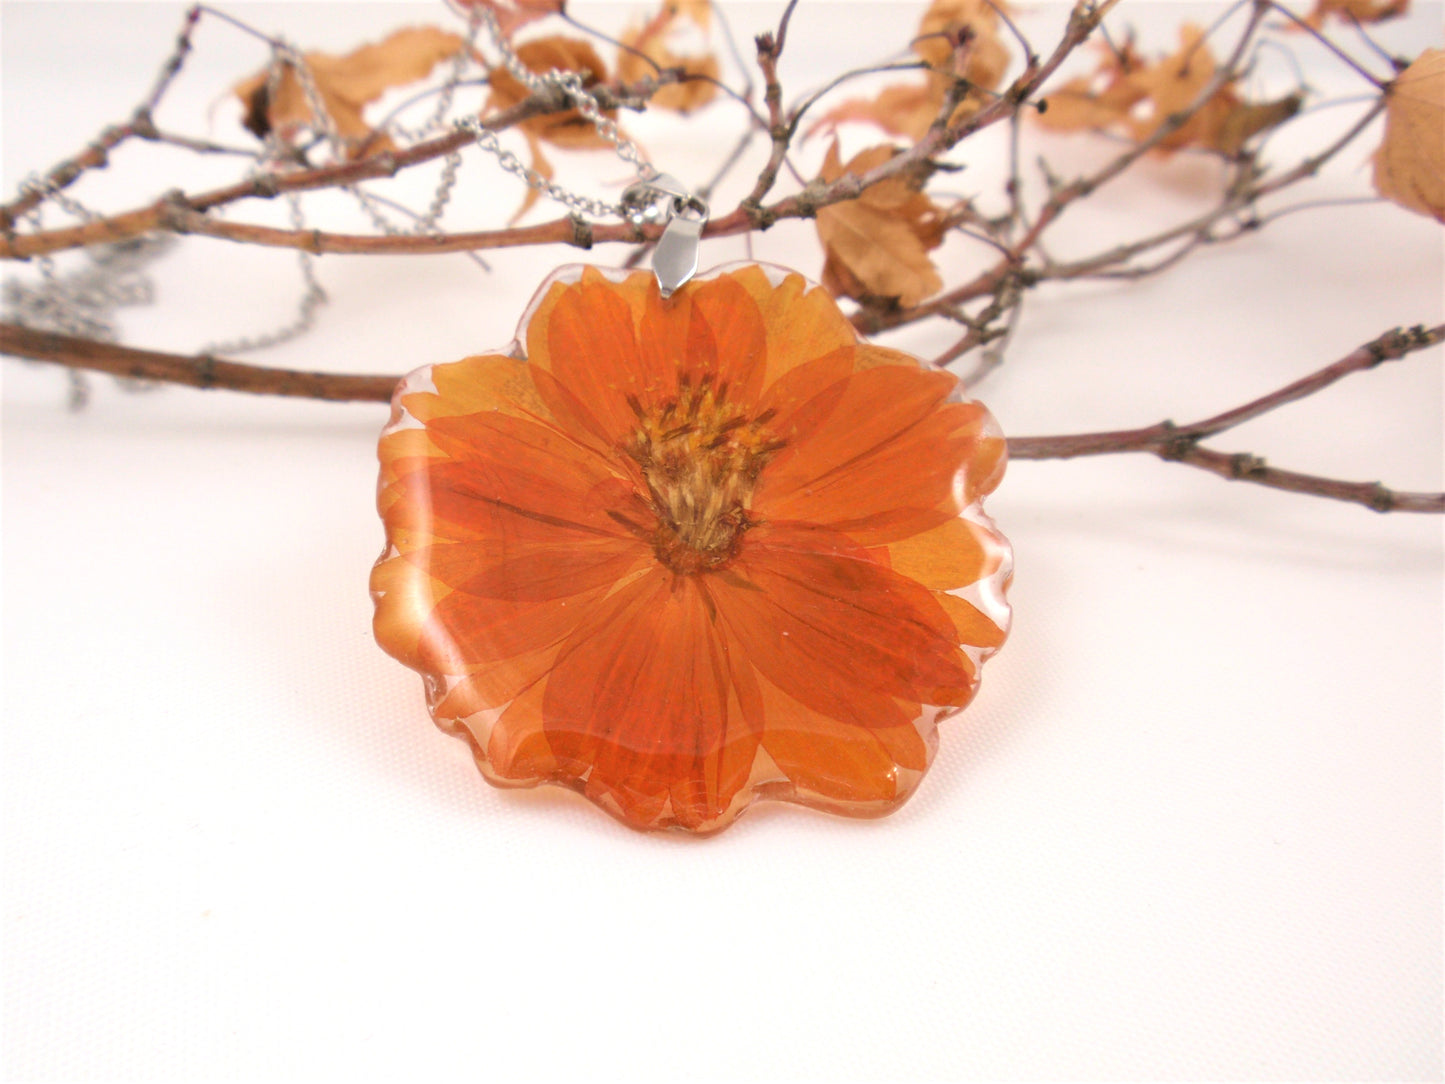 Birth Month flower October, Orange Cosmos Flower Necklace Nature jewelry